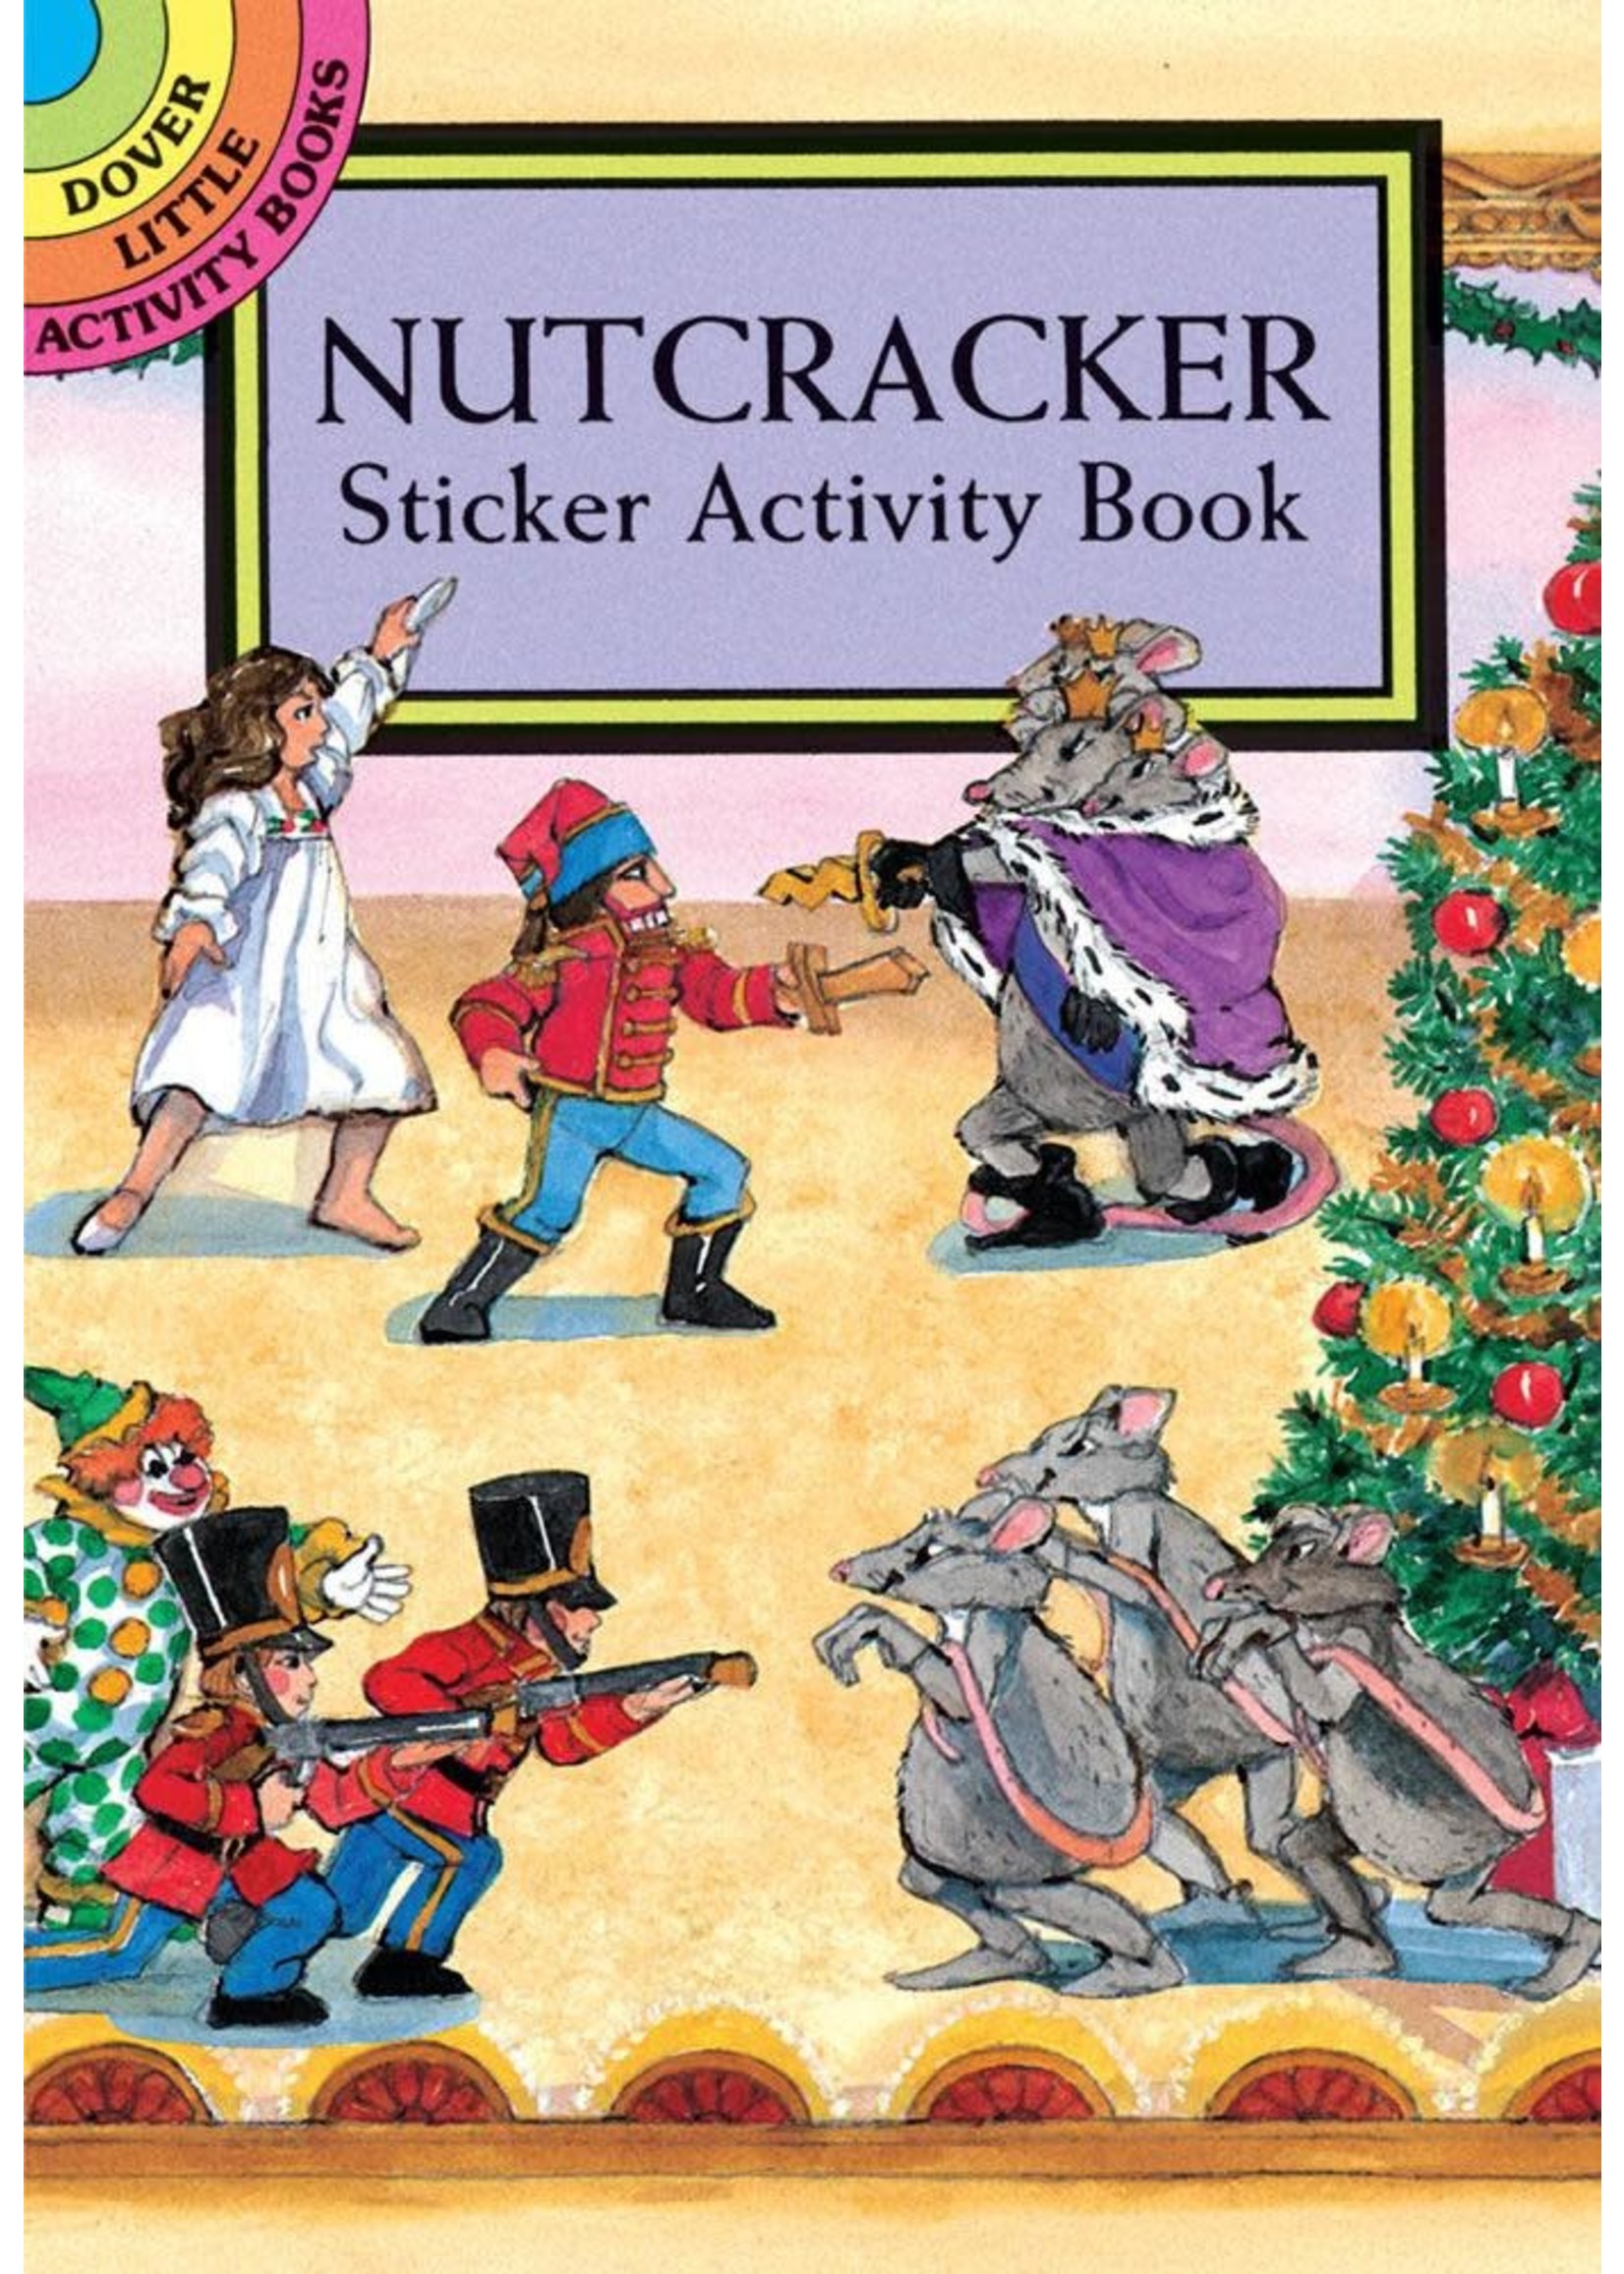 DOVER PUBLICATIONS 402543 NUTCRACKER STICKER ACTIVITY BOOK